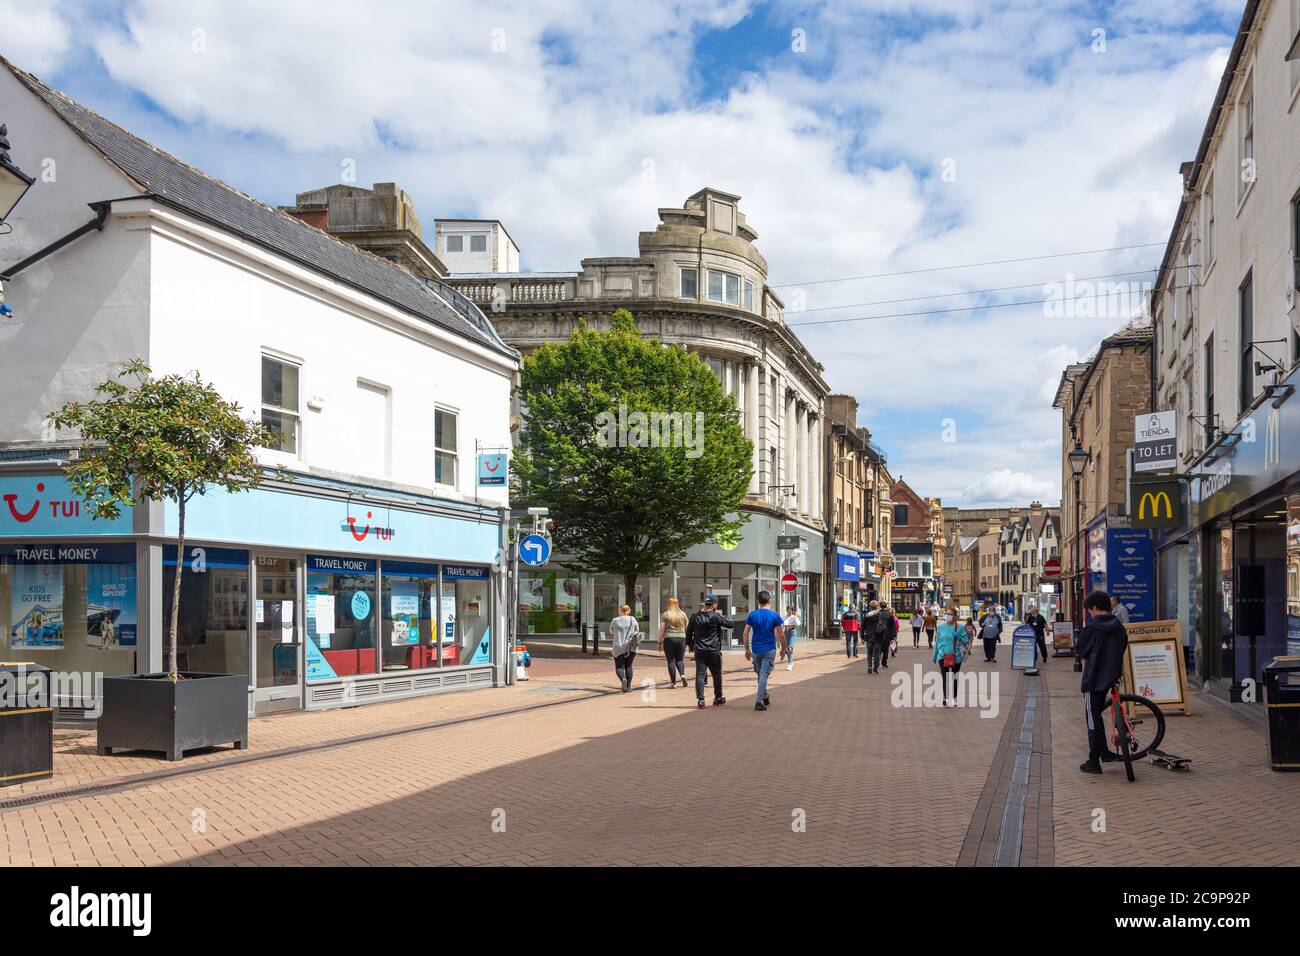 Pedestrianised shopping street, West Gate, Mansfield, Nottinghamshire, England, United Kingdom Stock Photo